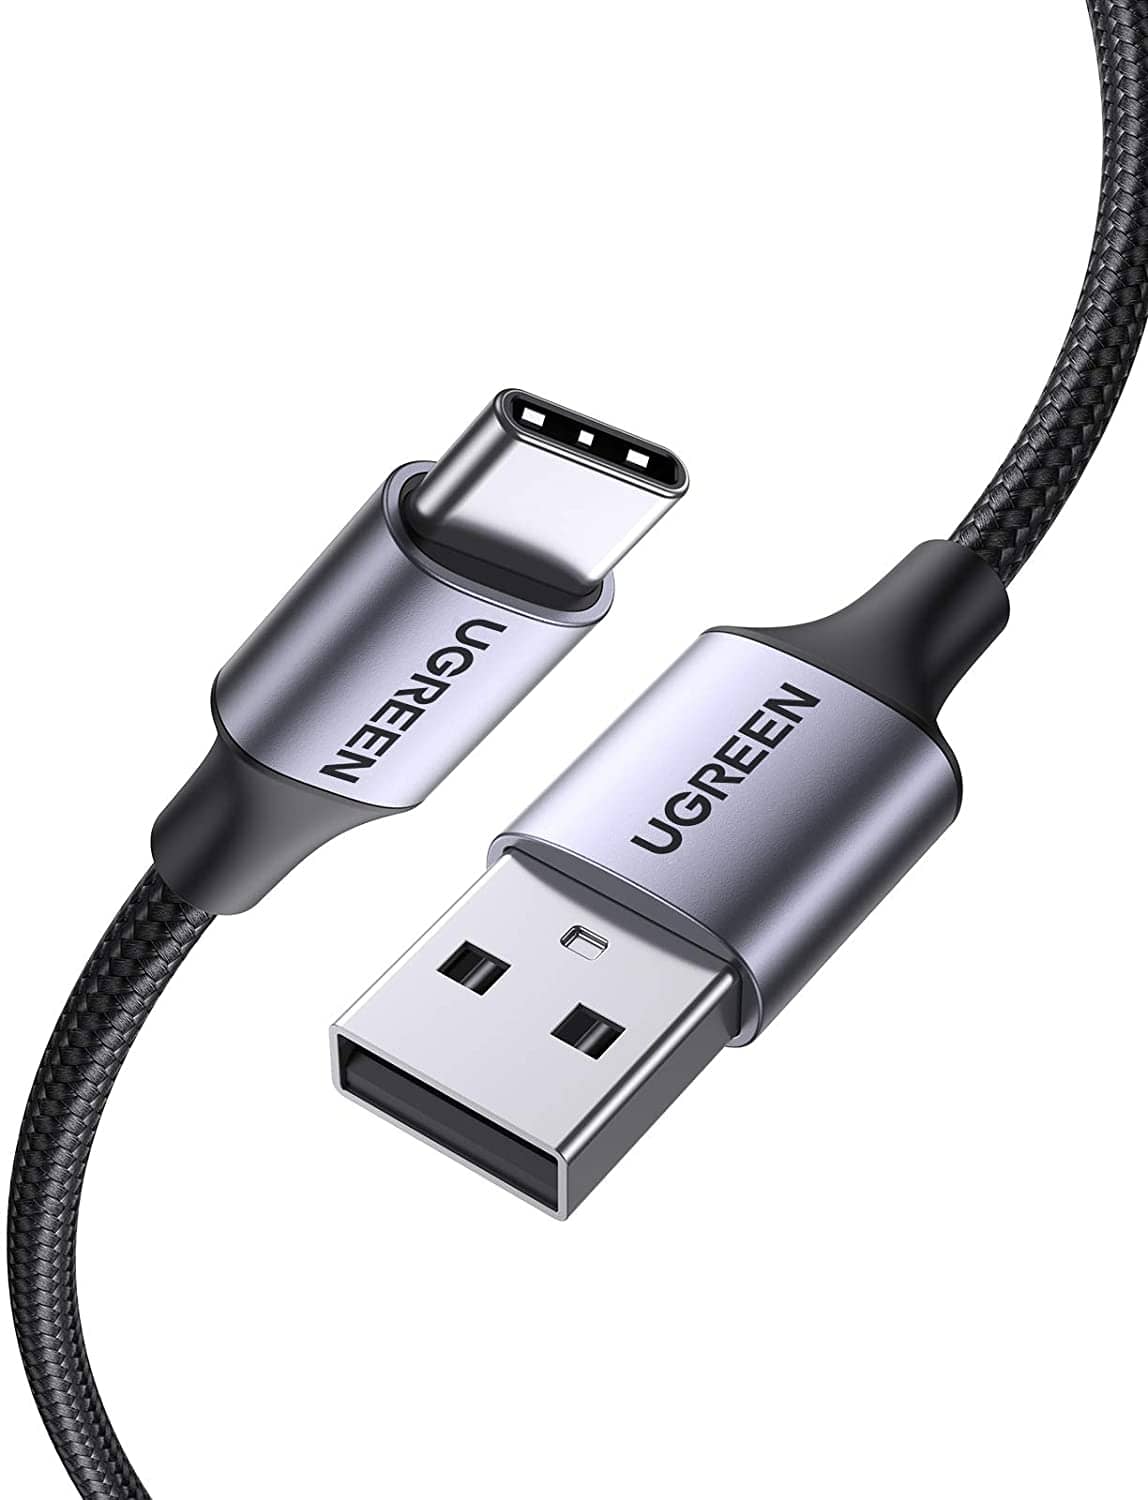 Ugreen USB 2.0 Data Cable